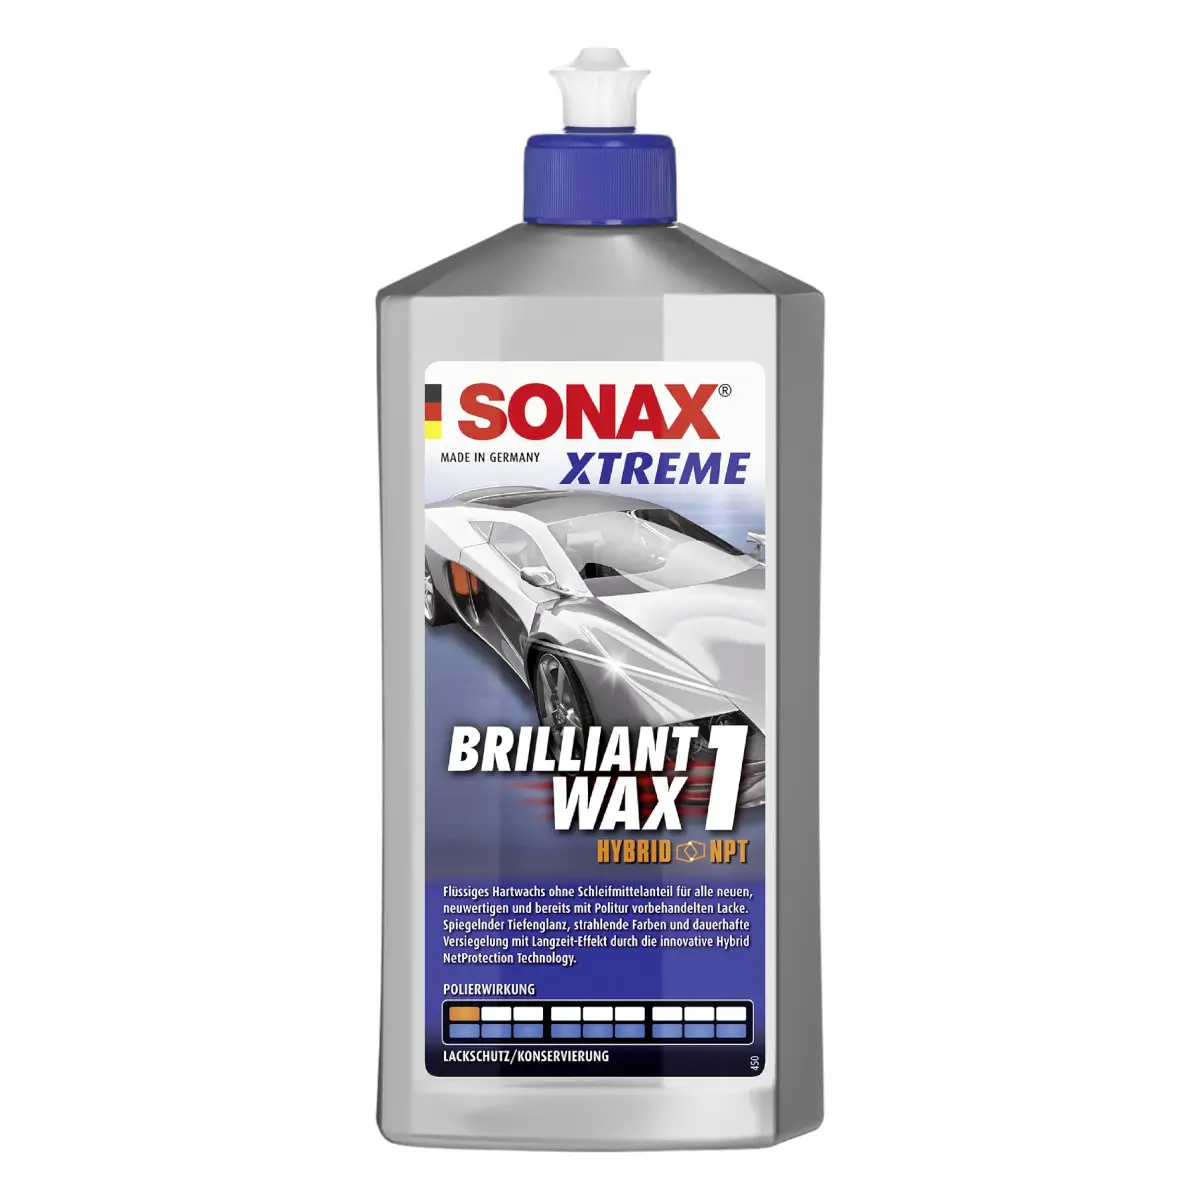 Sonax Xtreme Brilliant Wax 1 Hybrid NPT 500ml